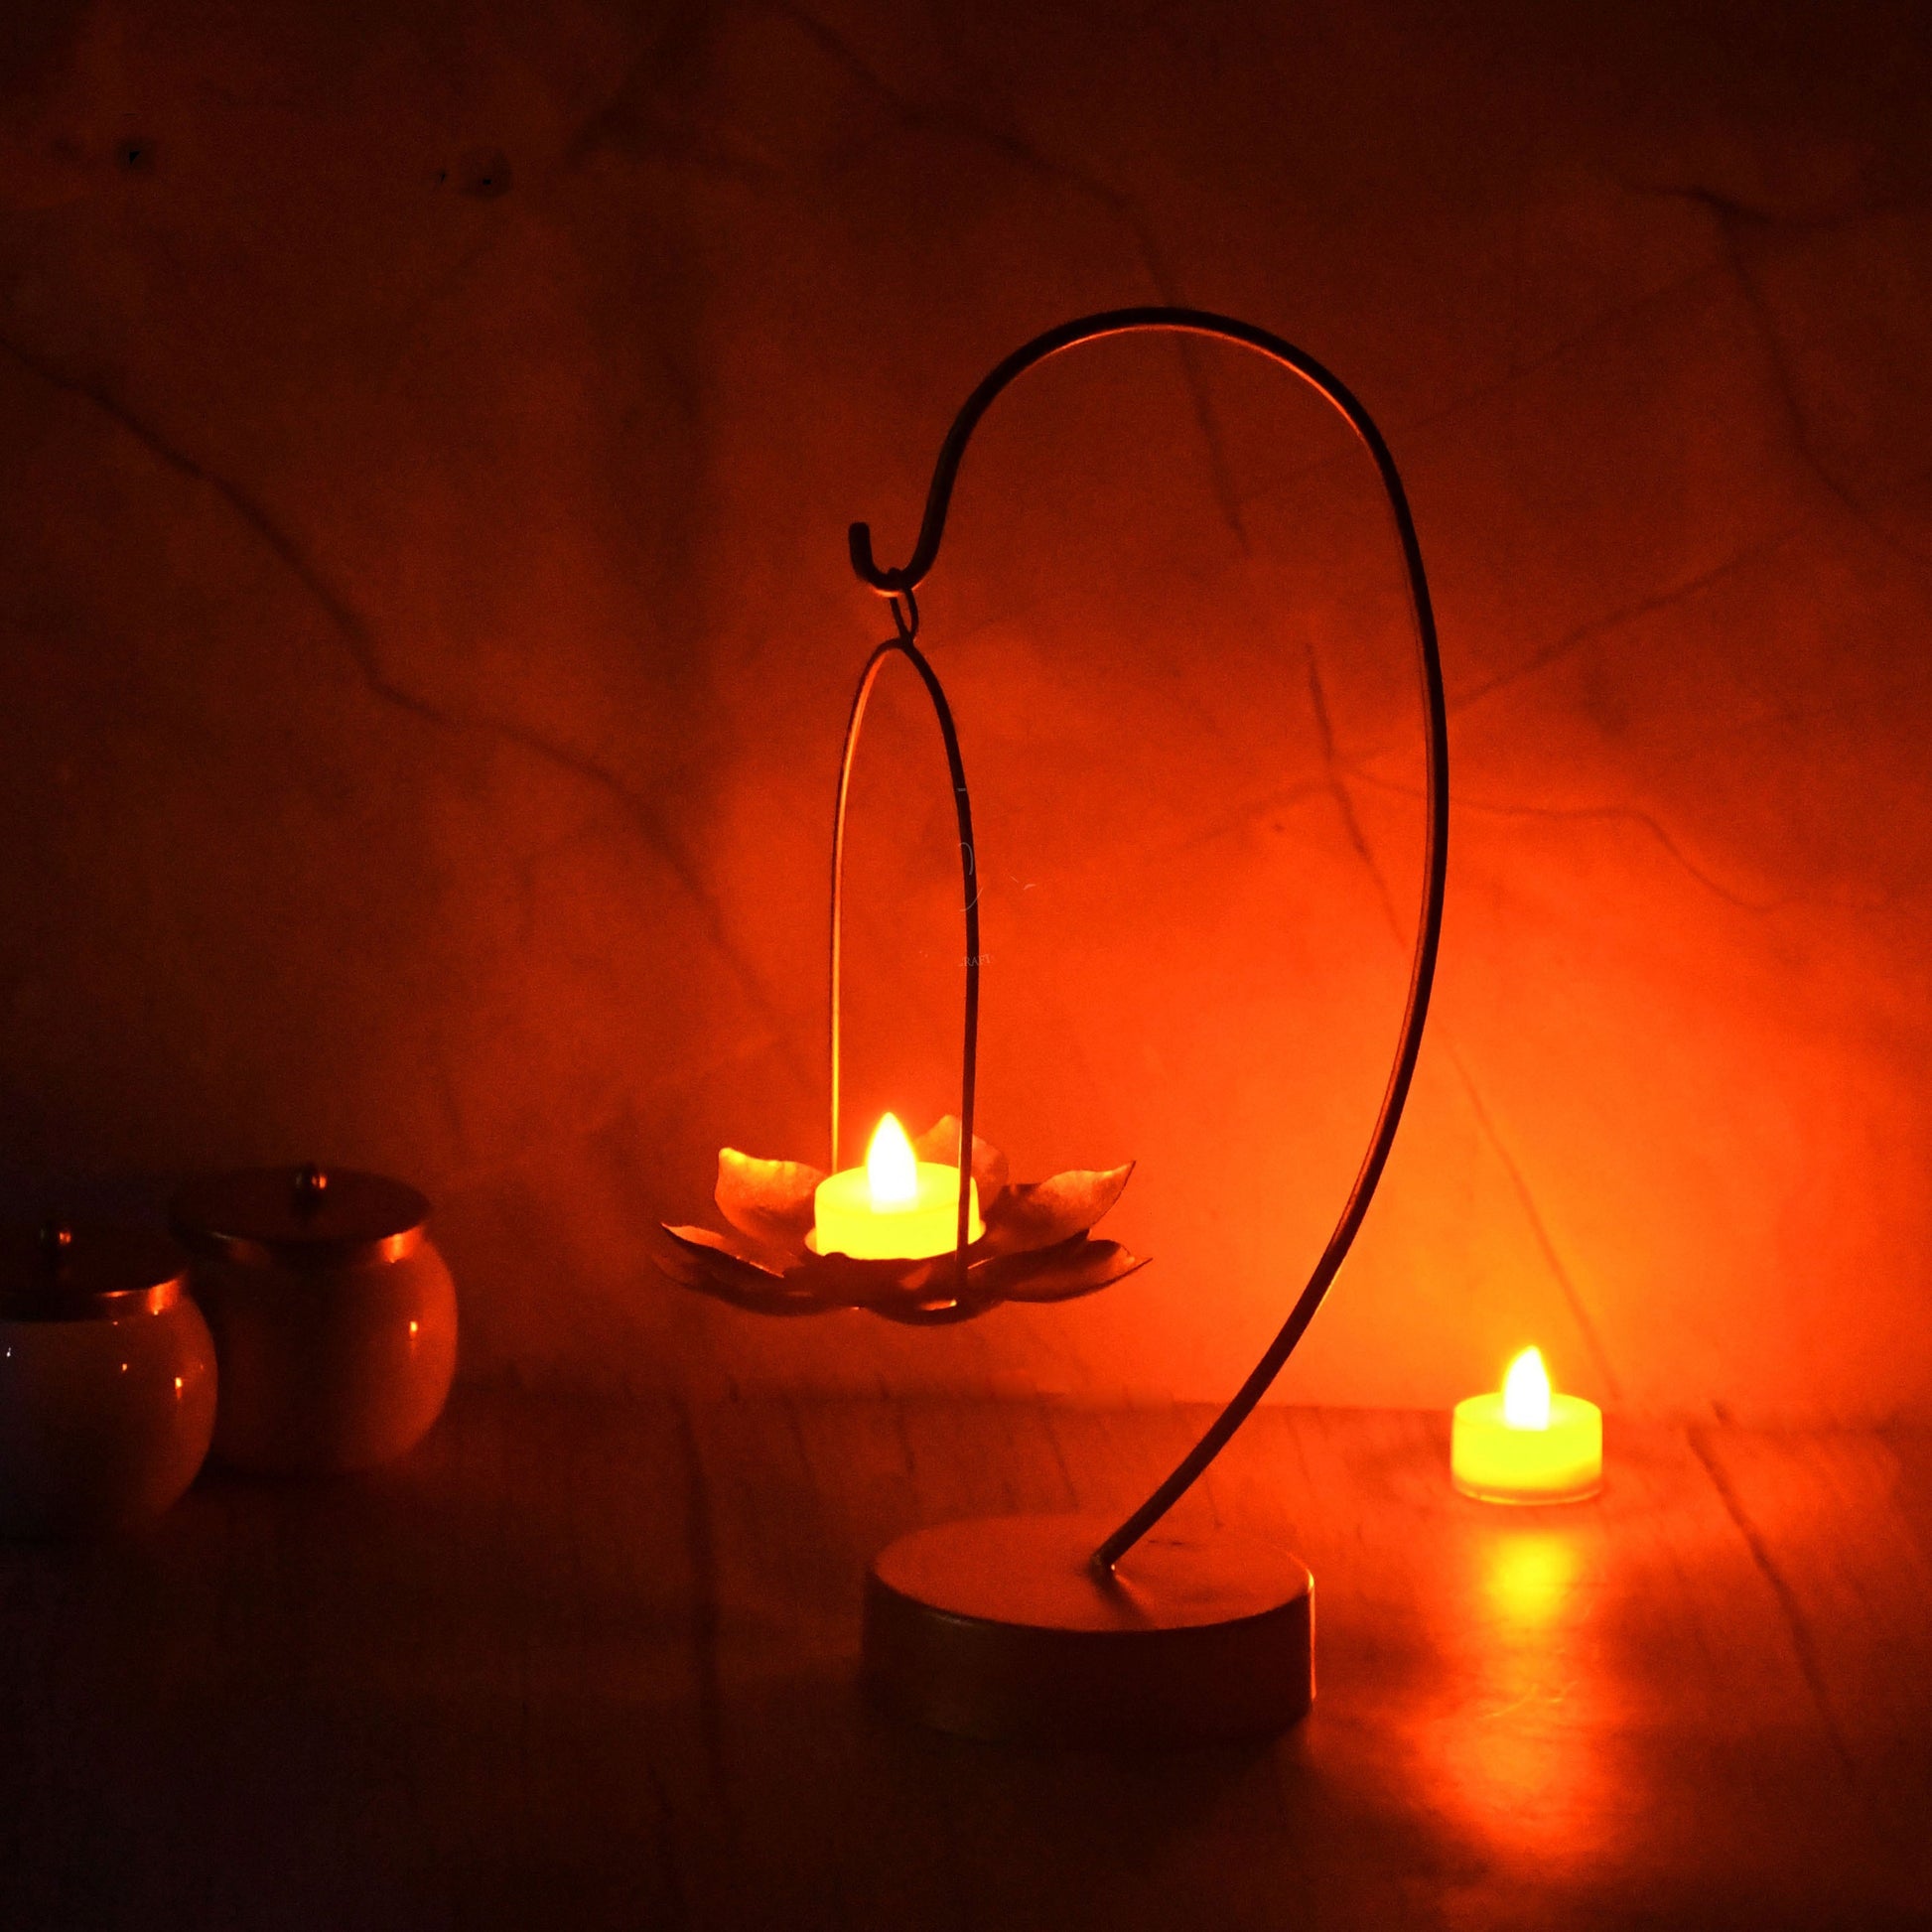 SAMA Homes - exclusive hanging diya with floral tea light candle holder